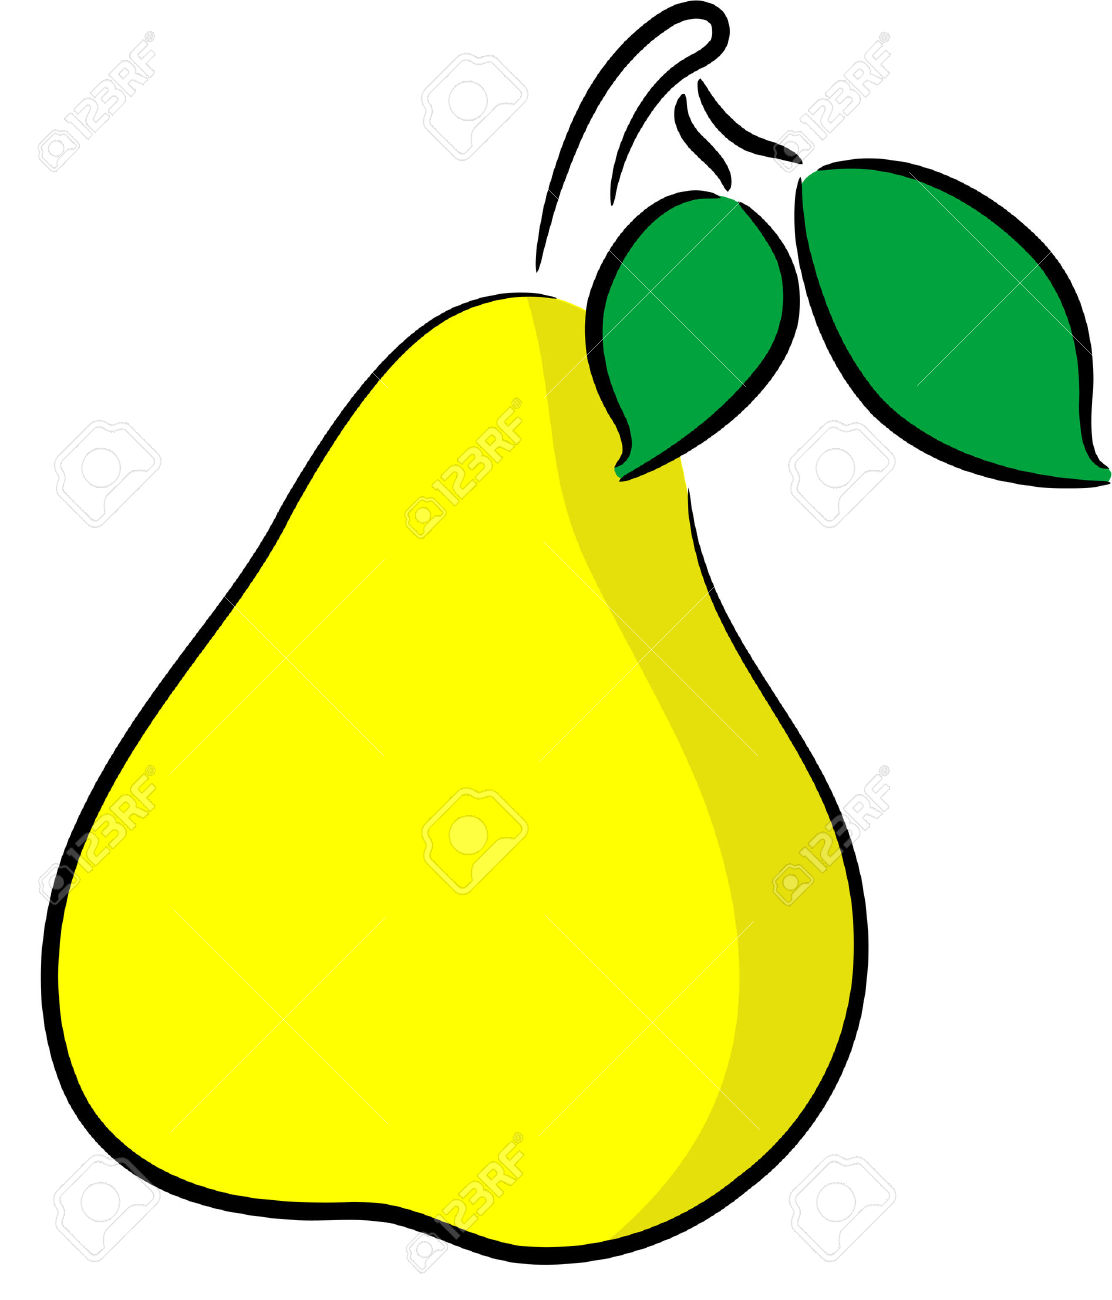 pear clipart. Pear cliparts